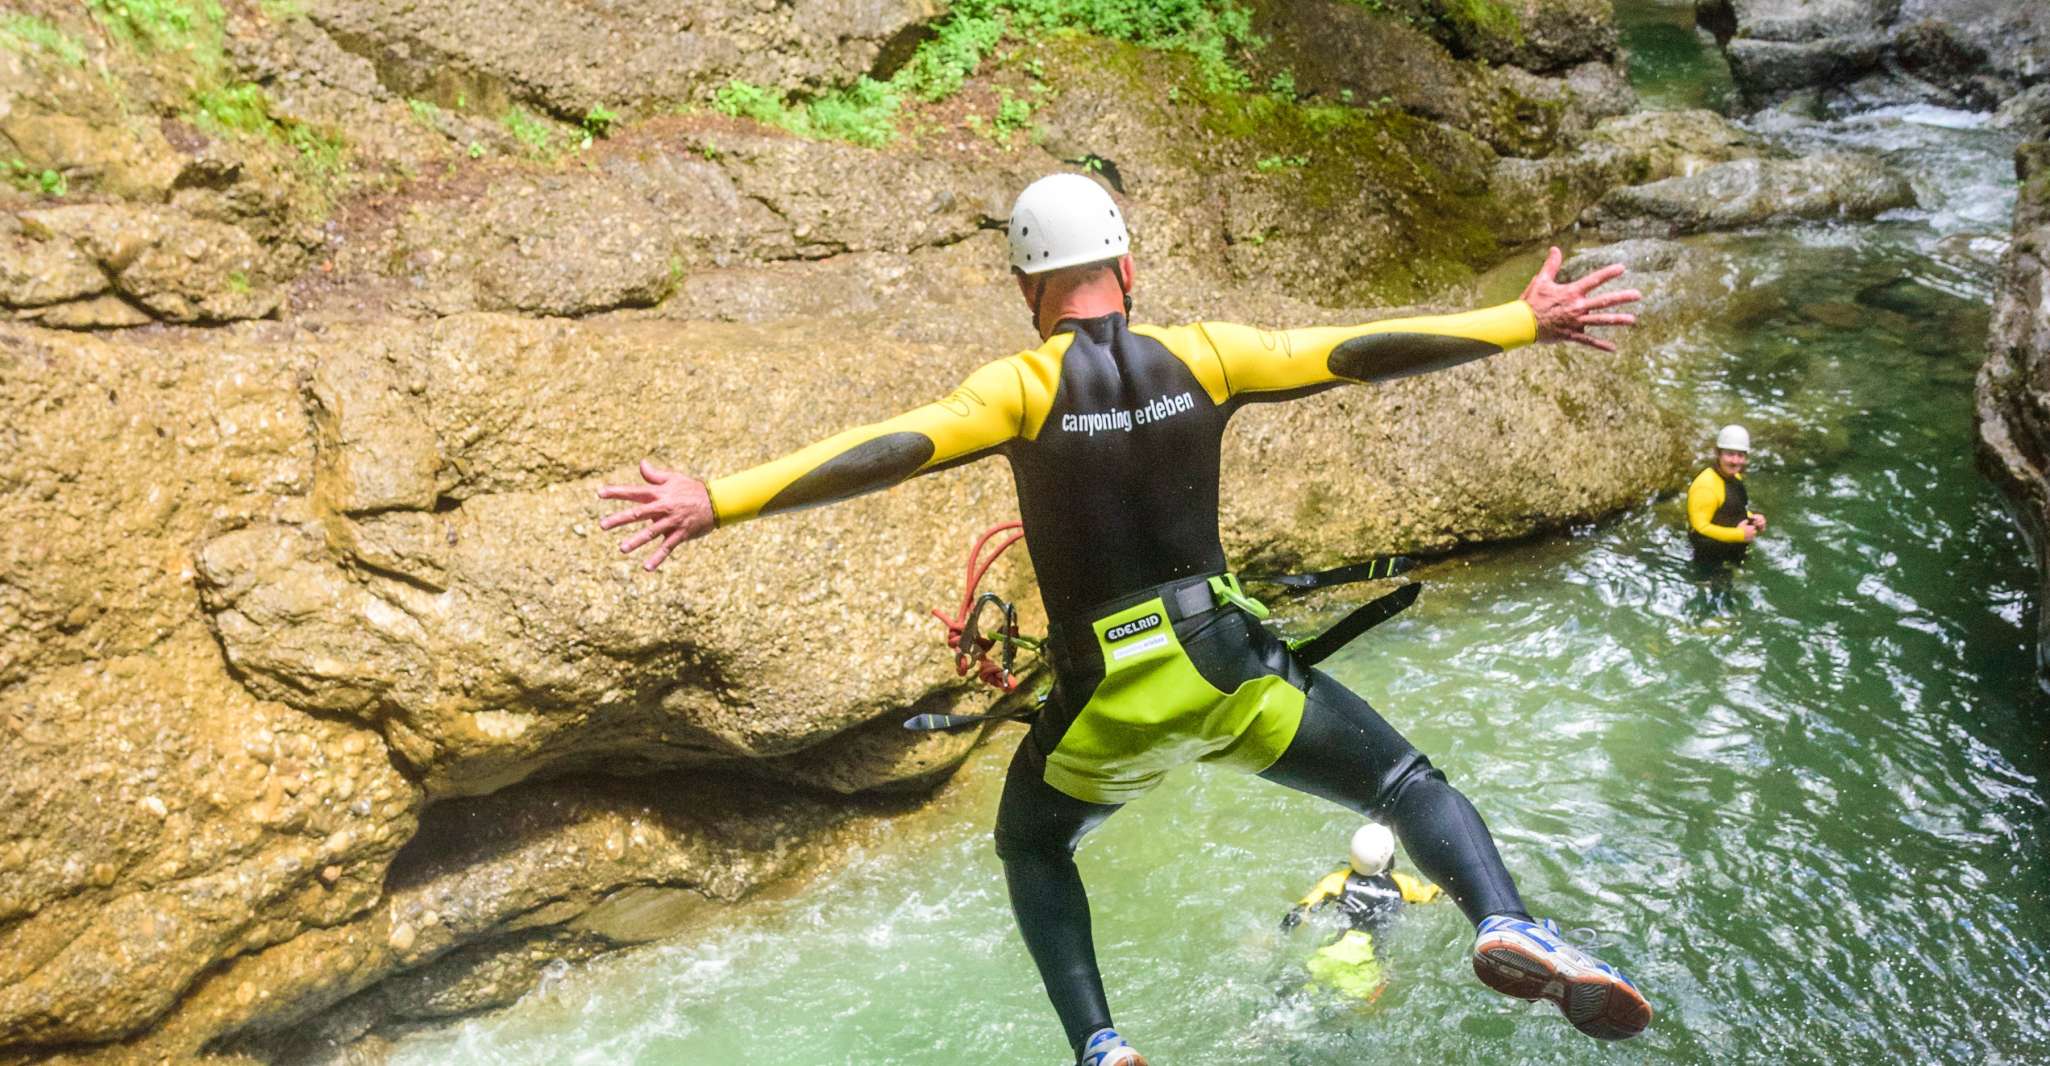 Blaichach, Starzlachklamm Canyoneering Adventure - Housity